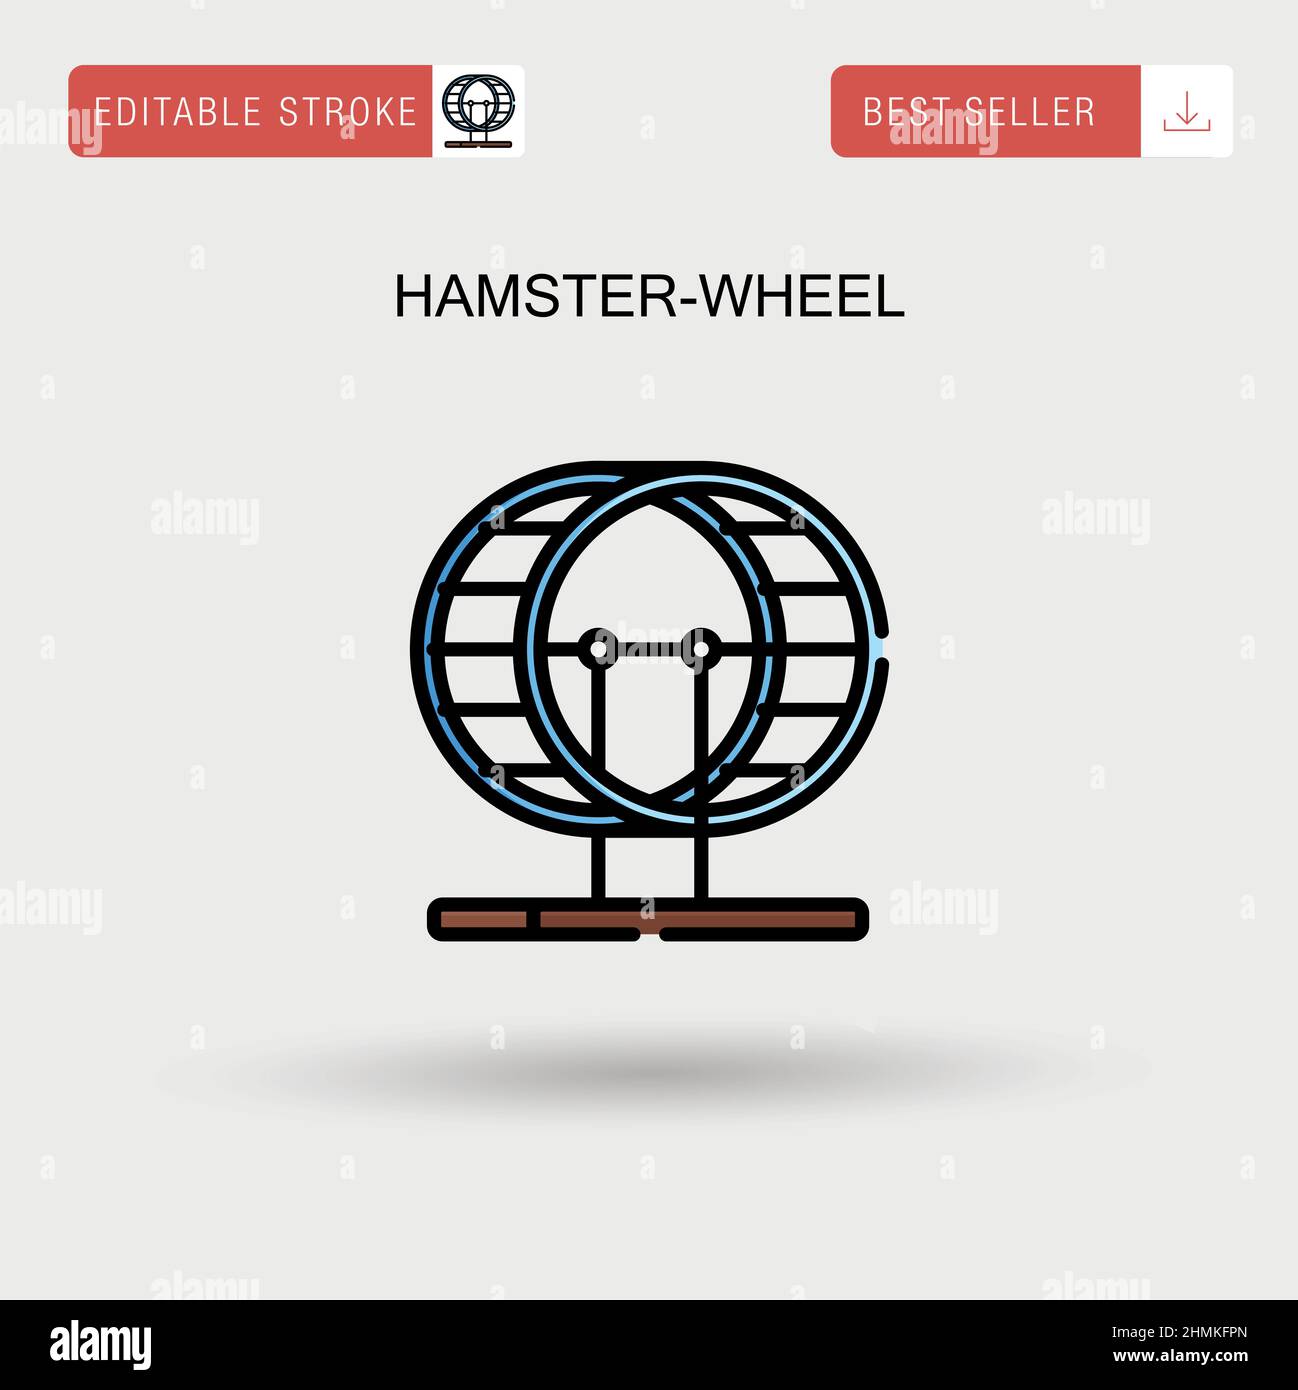 Einfaches Vektorsymbol für Hamsterrad. Stock Vektor